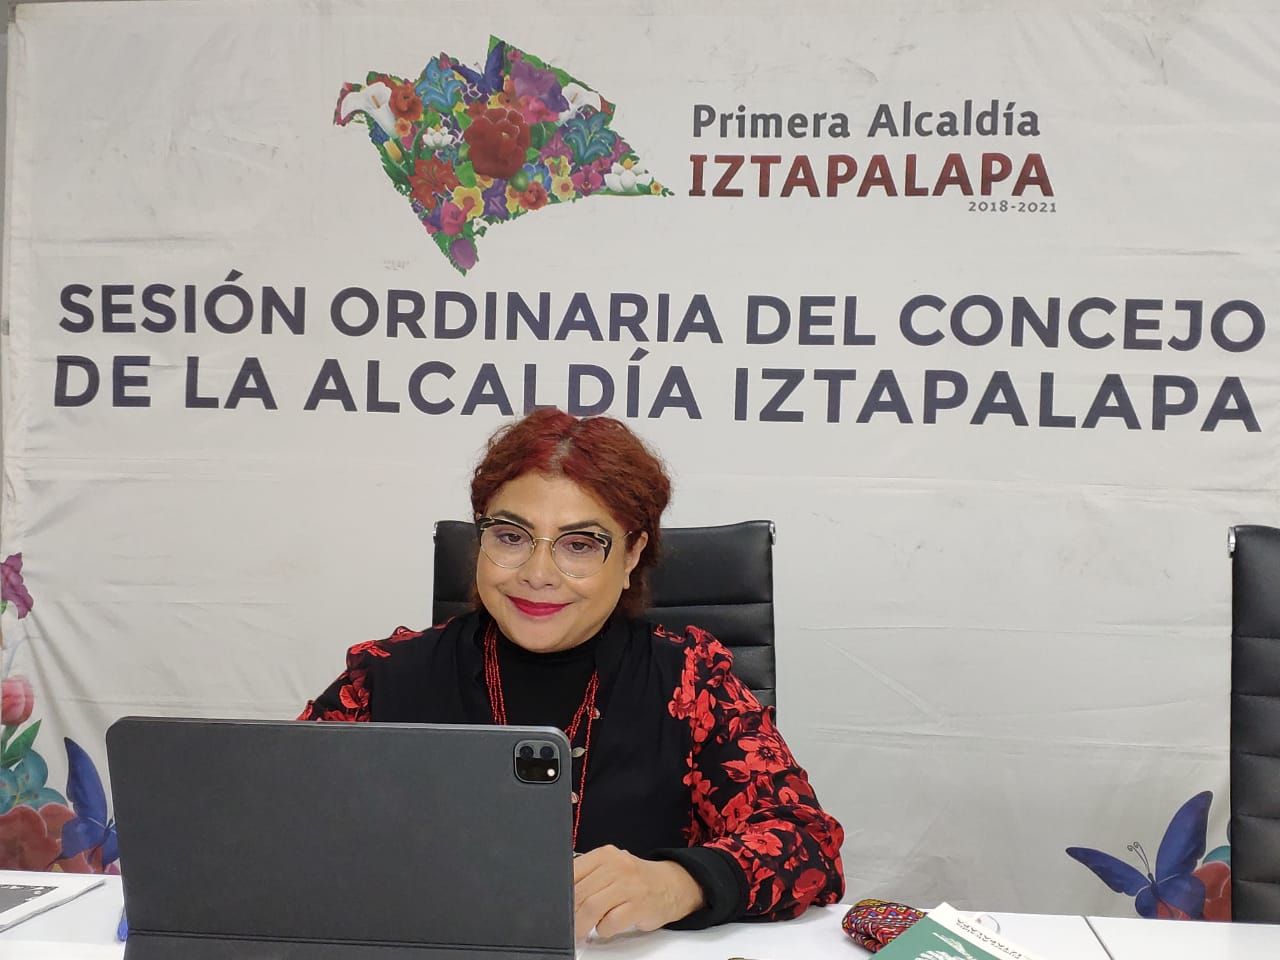 Iztapalapa distribuye kits con medicamentos homeopáticos